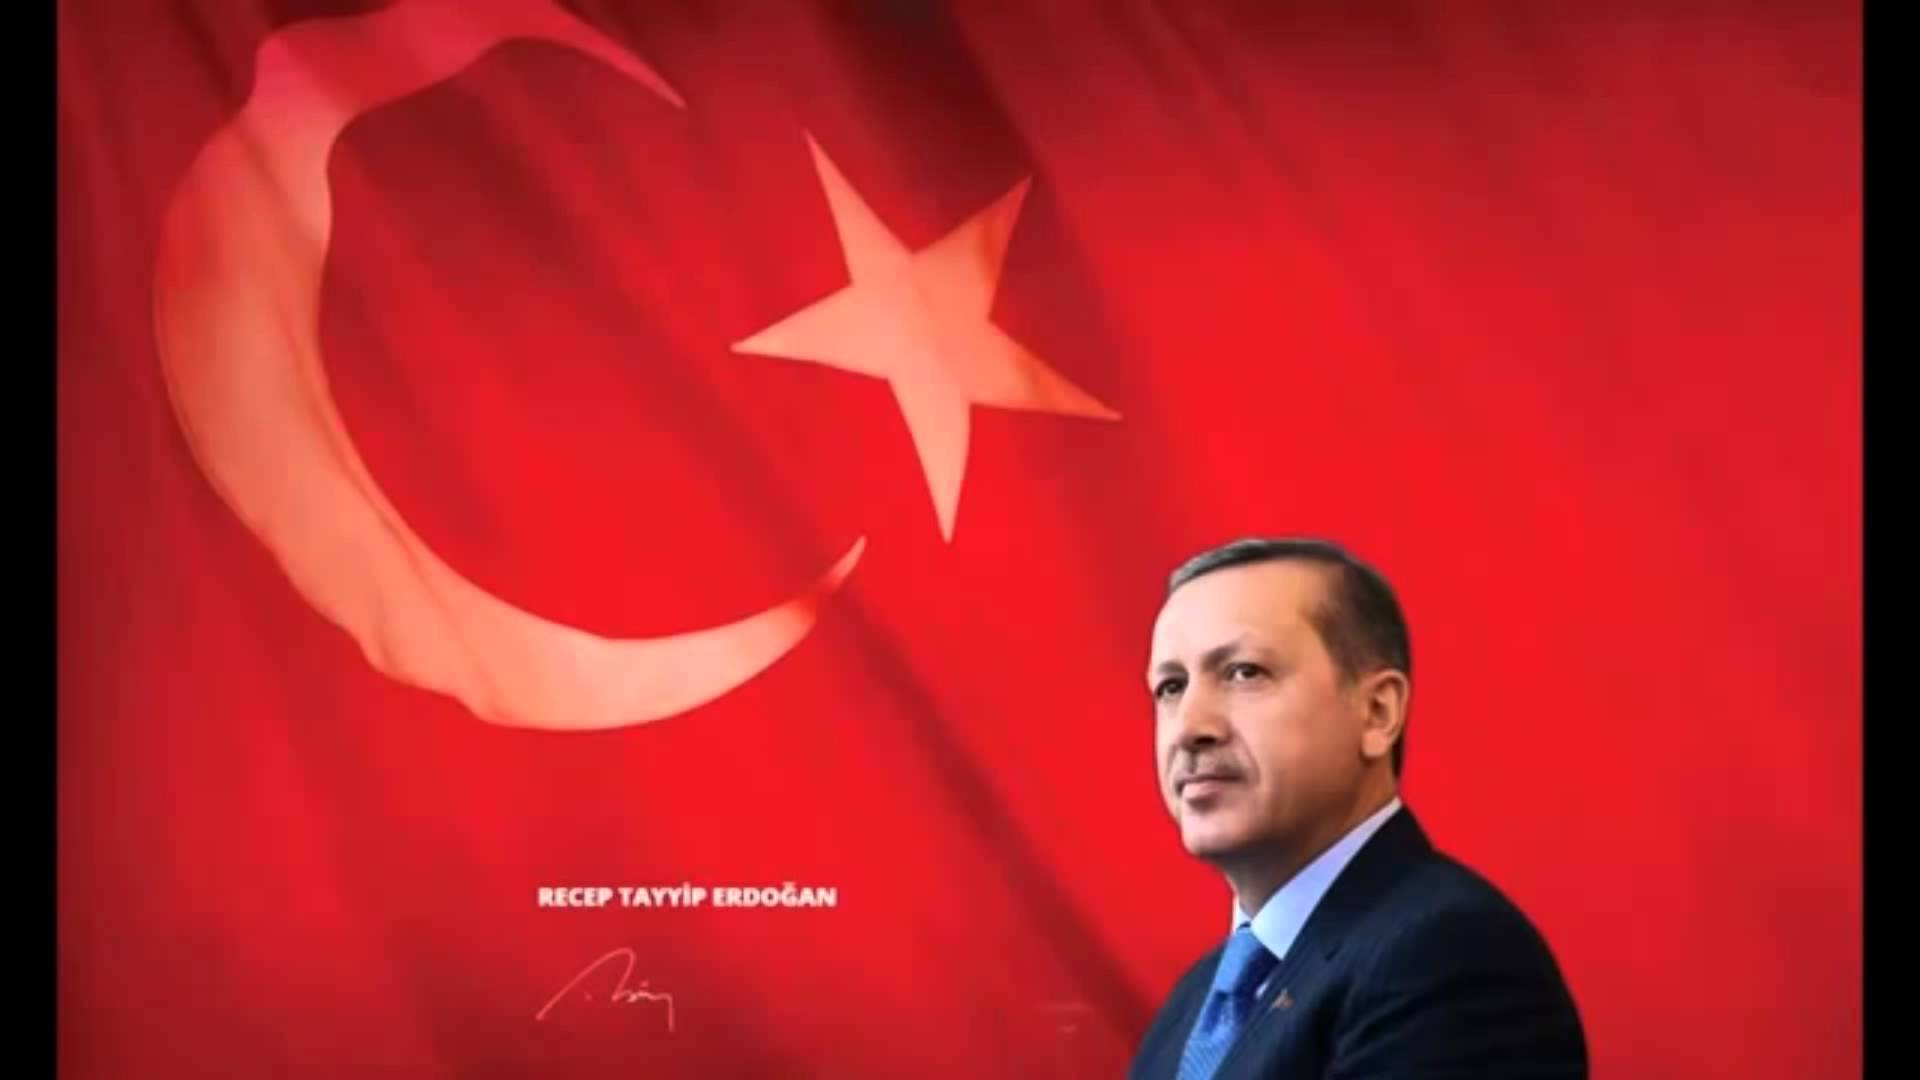 Recep Tayyip Erdogan Wallpaper. HD Wallpaper, HD Image